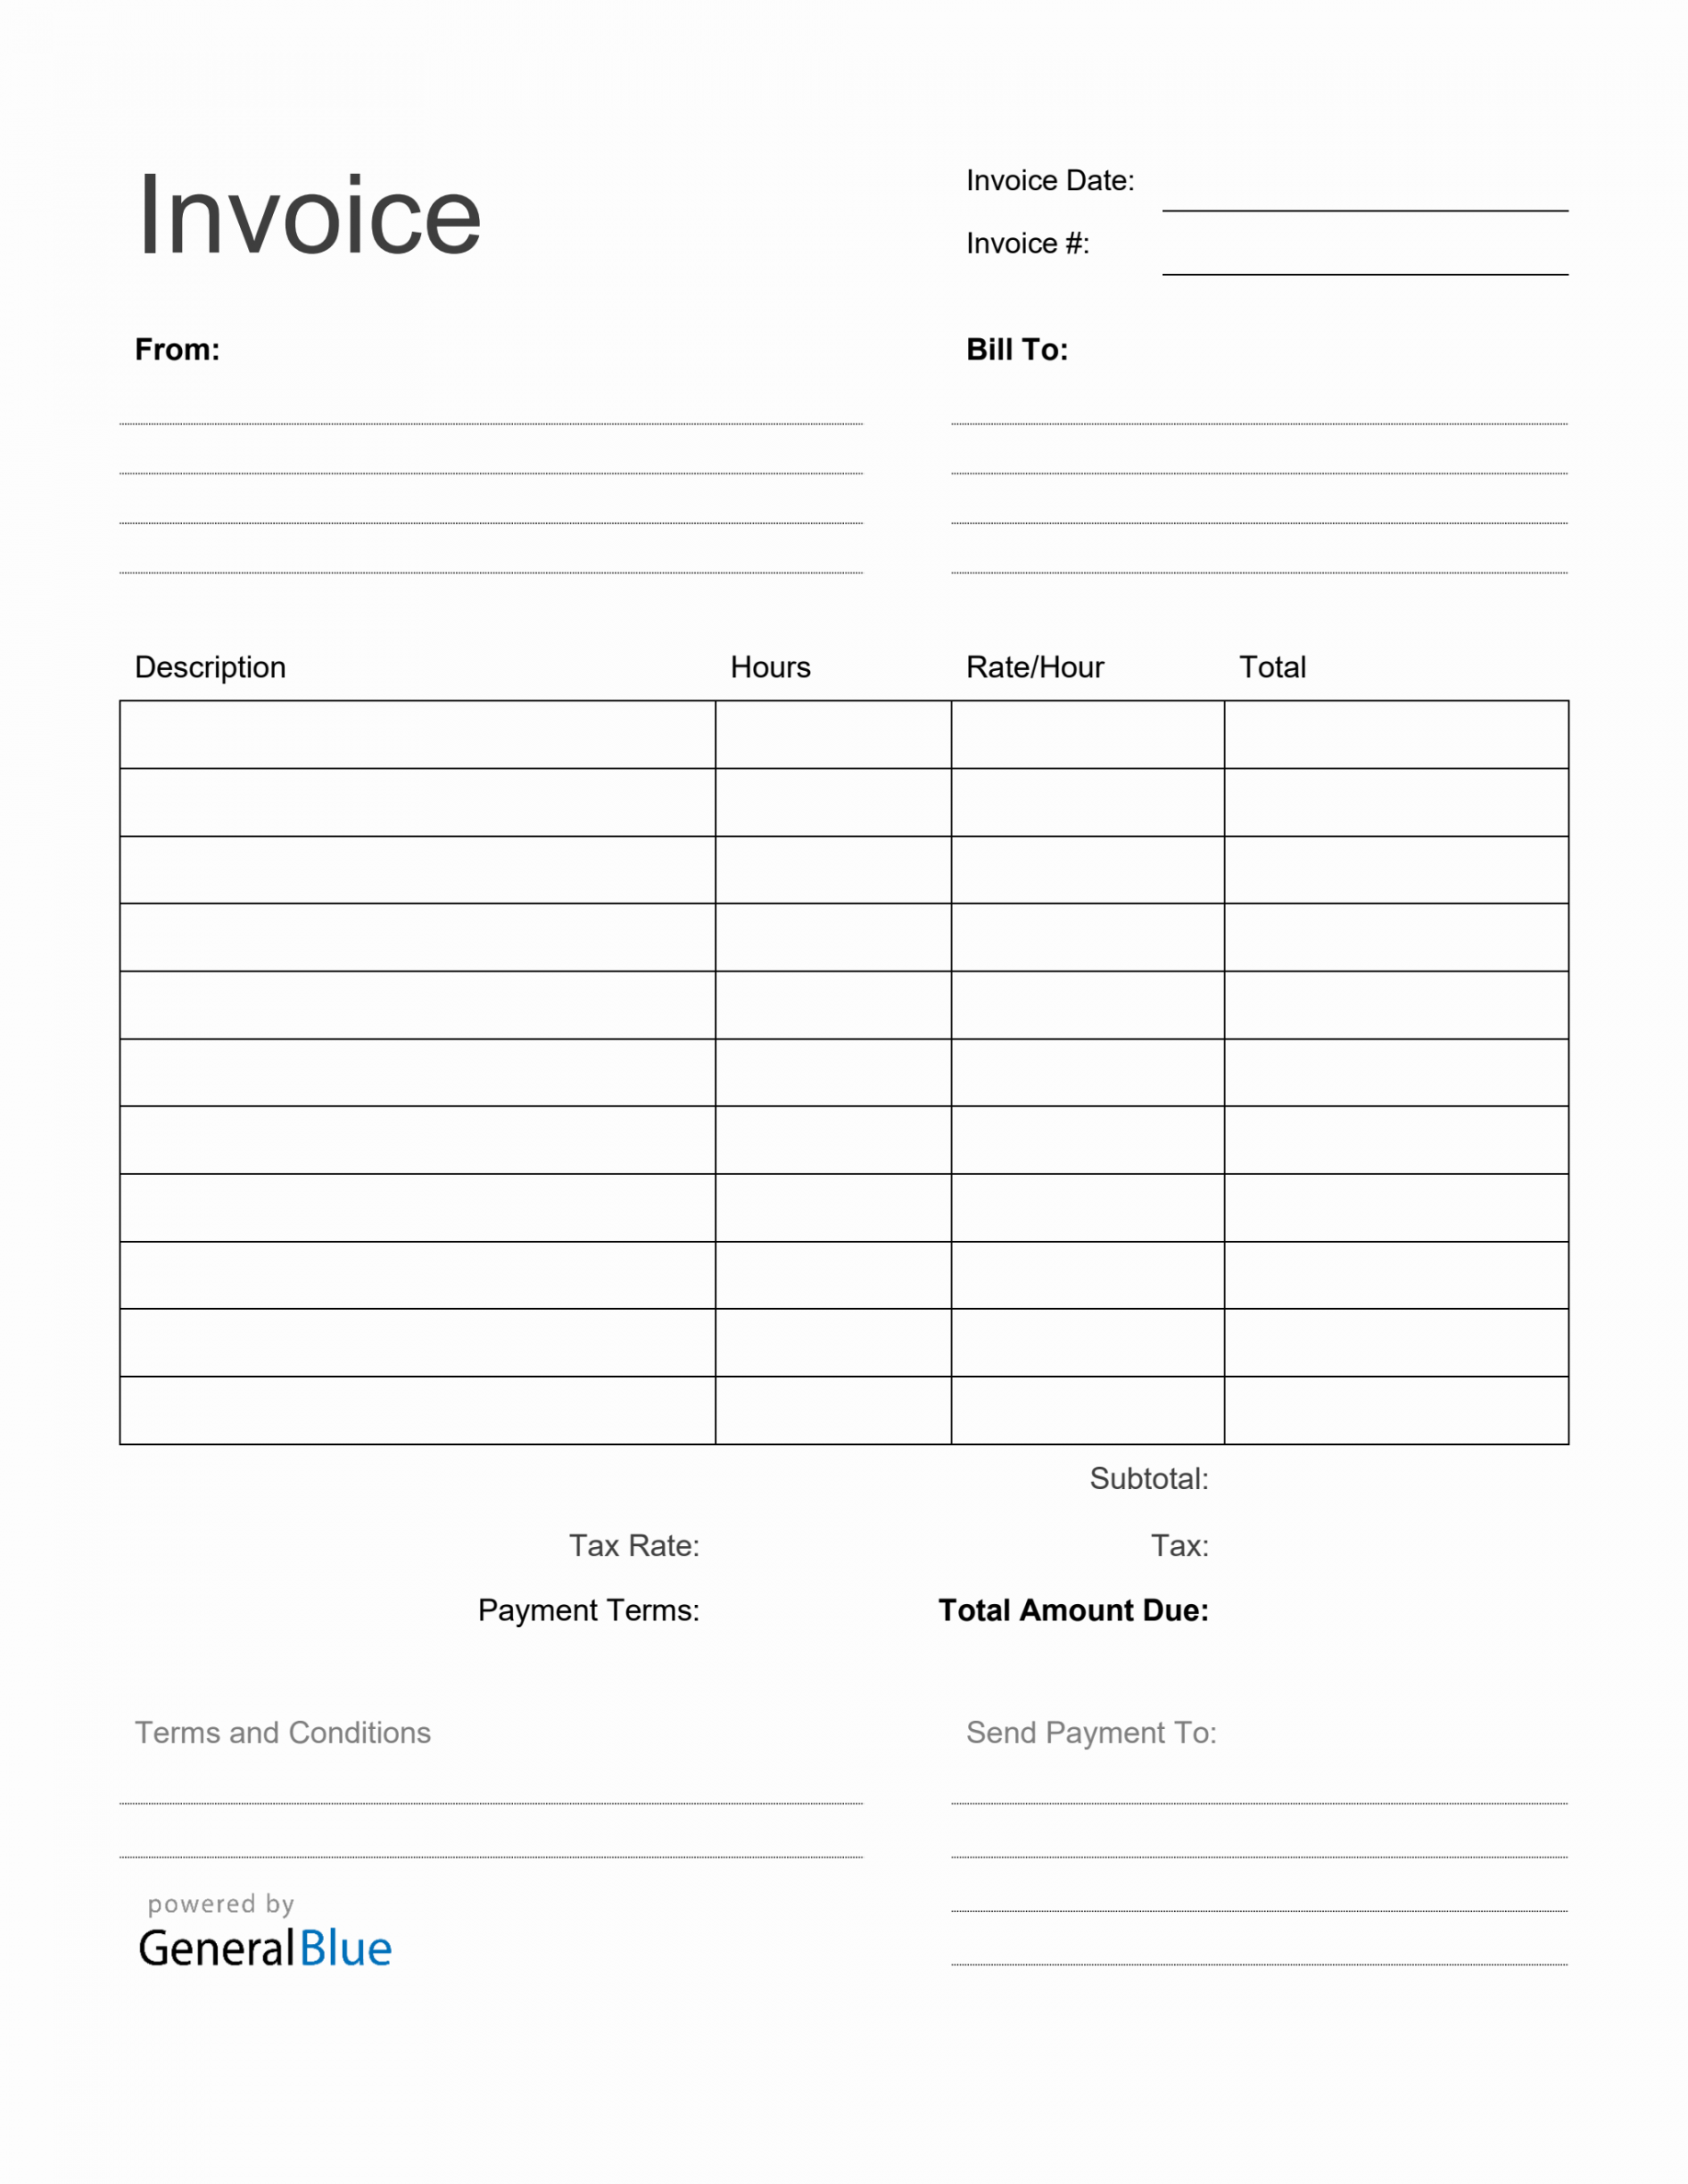 Printable Invoice Templates Free - Printable - Blank Invoice Template in Word Printable